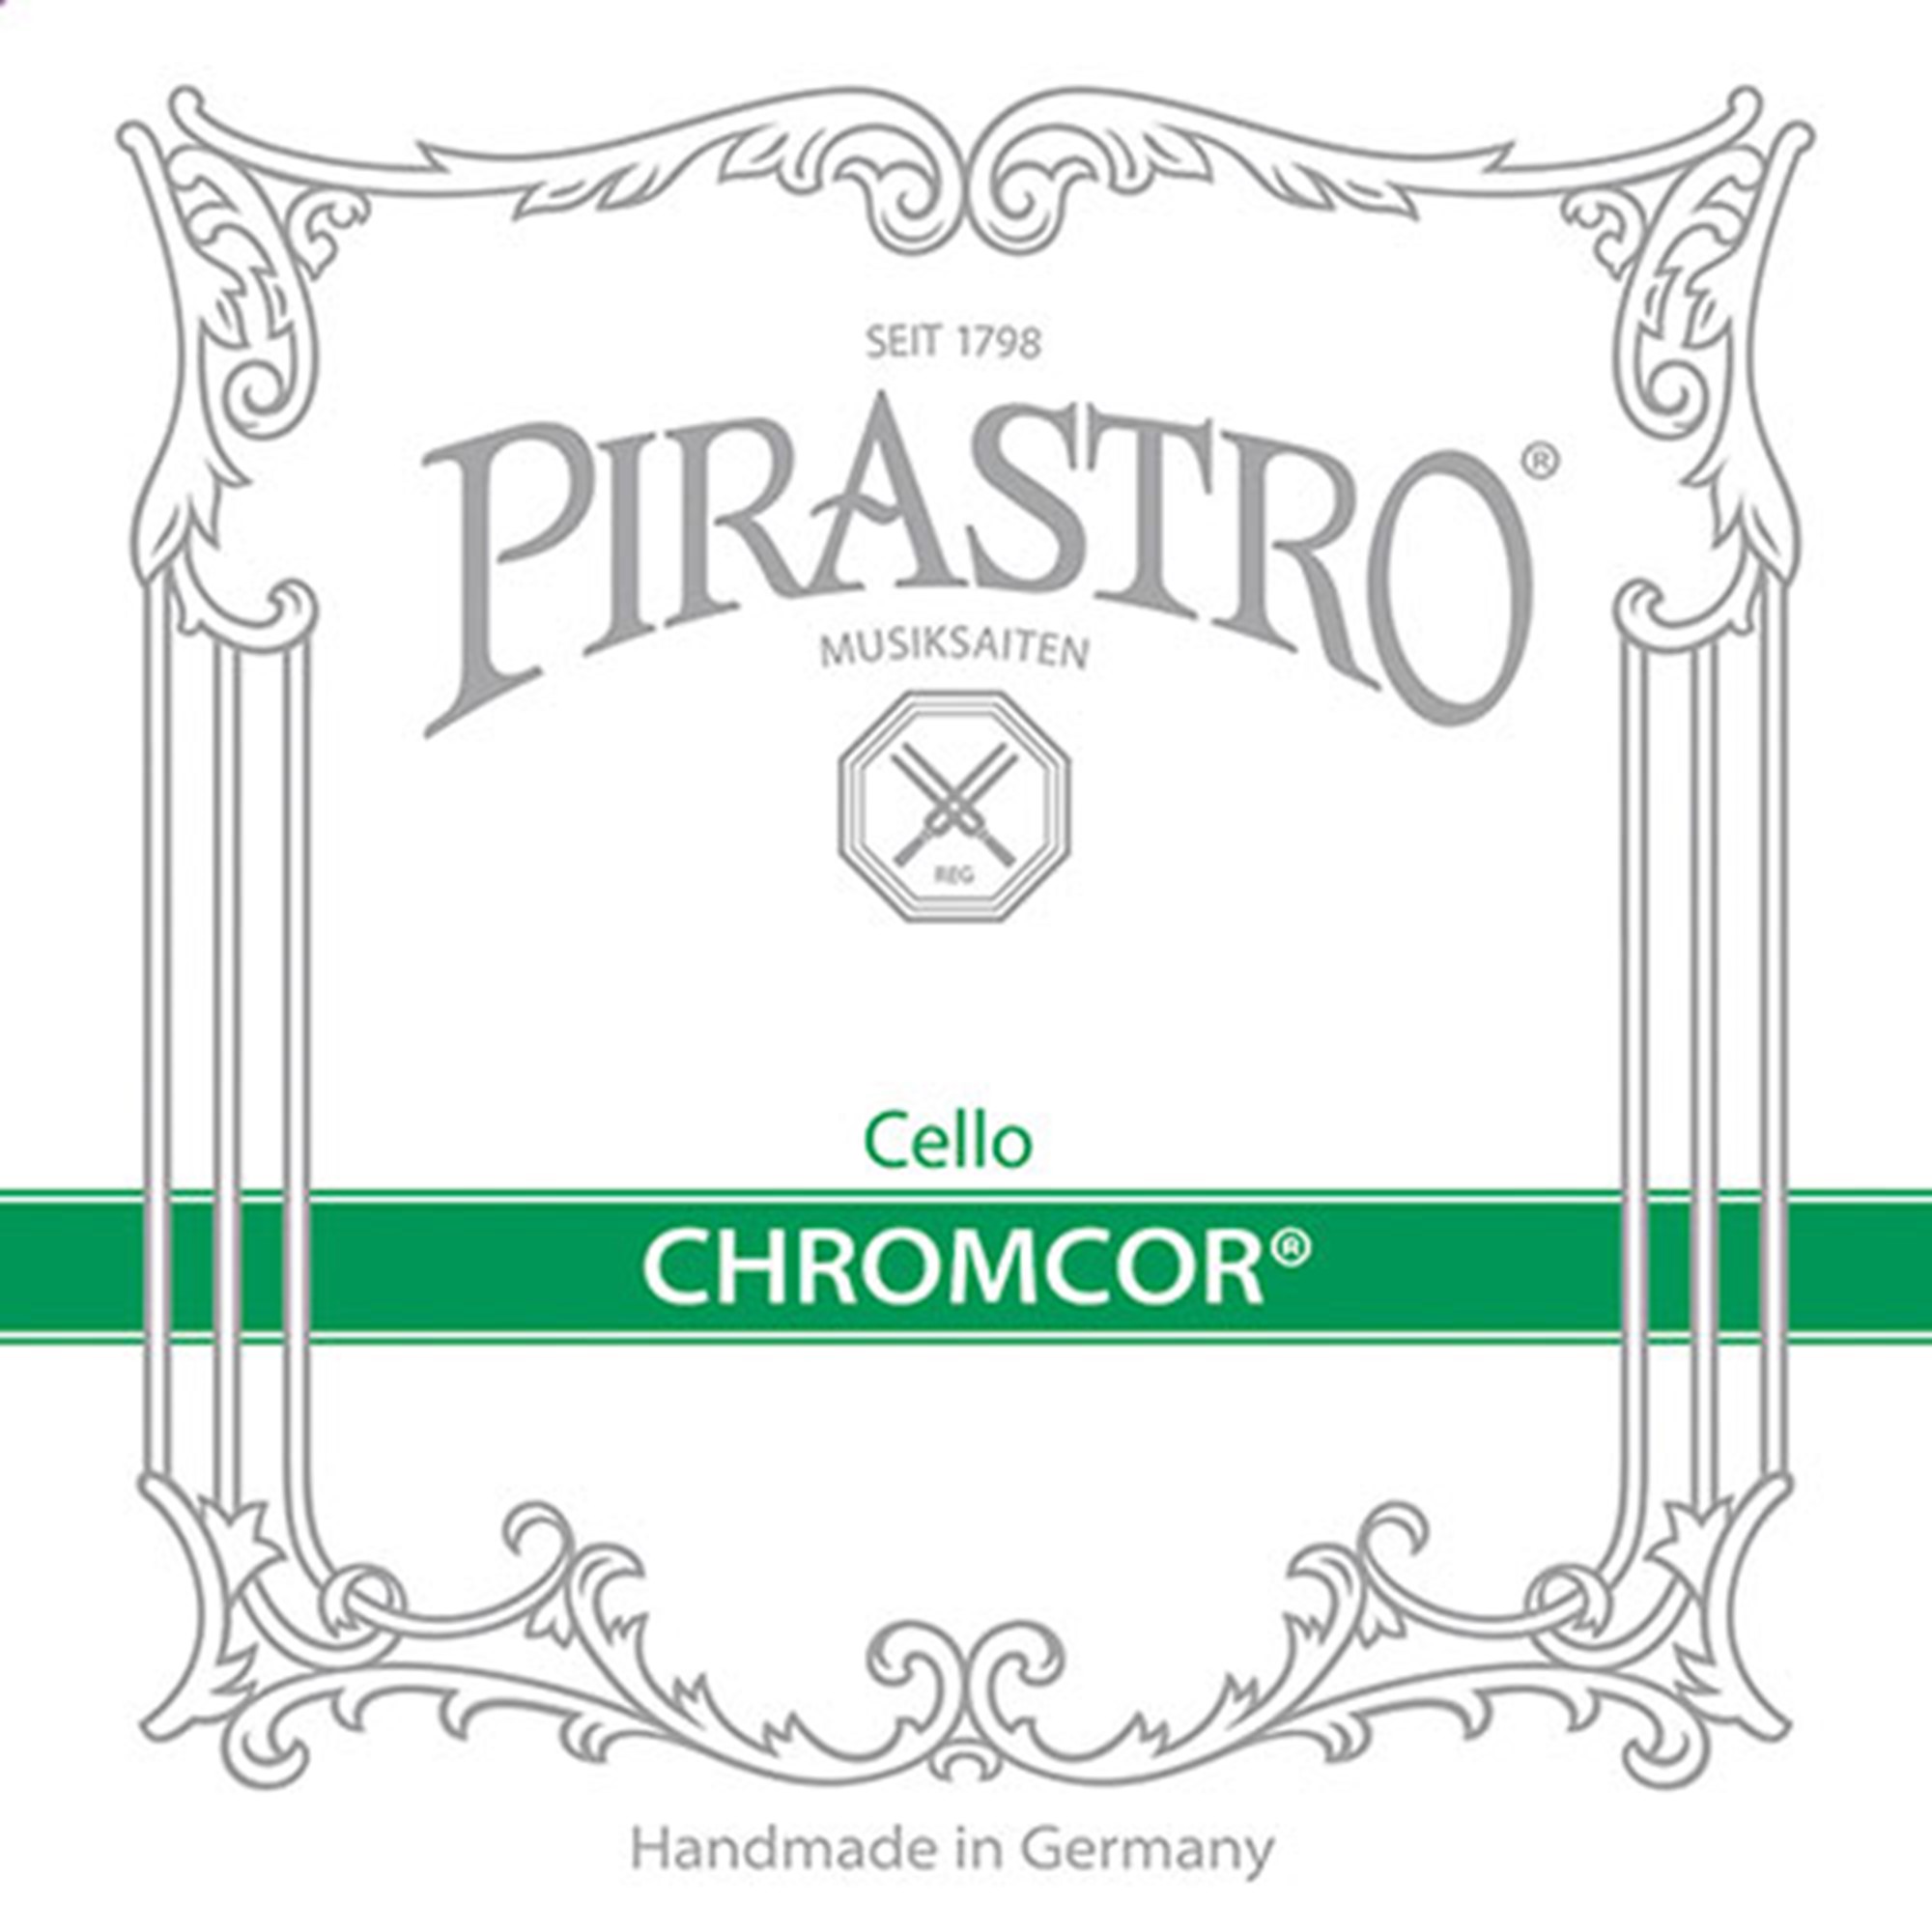 Pirastro Chromcor Cello String Set in action